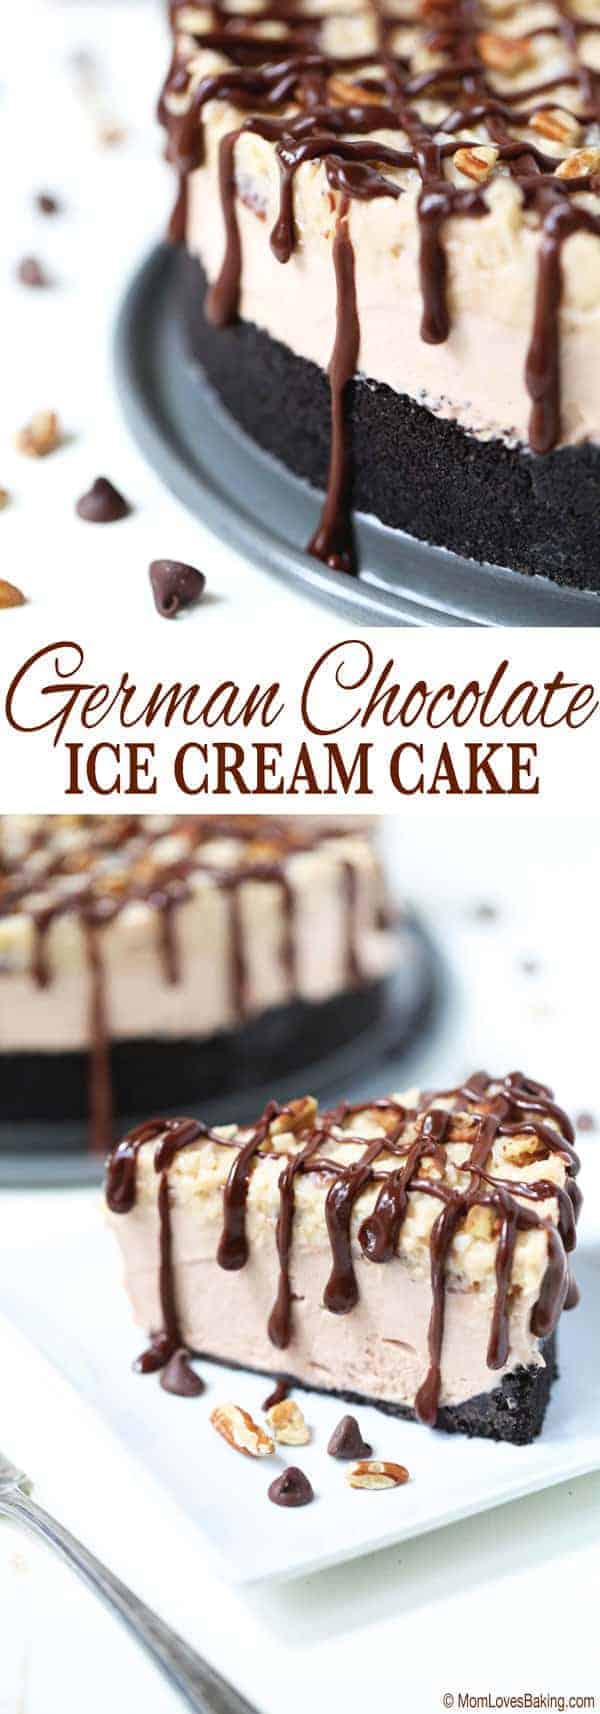 German Chocolate Ice Cream Cake